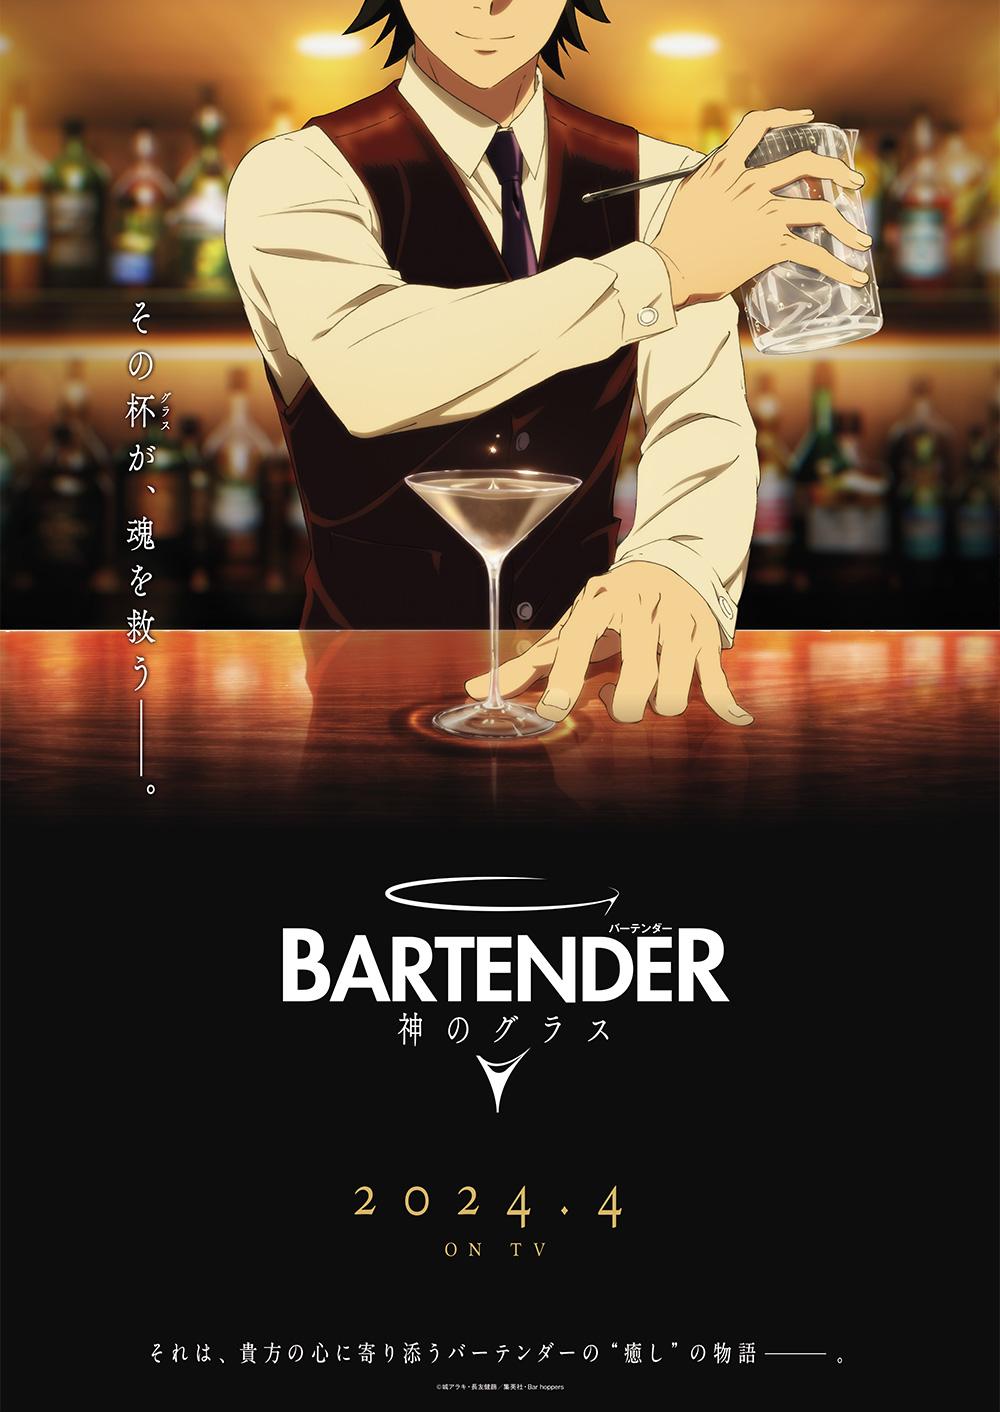 انمي Bartender: Kami no Glass مترجم